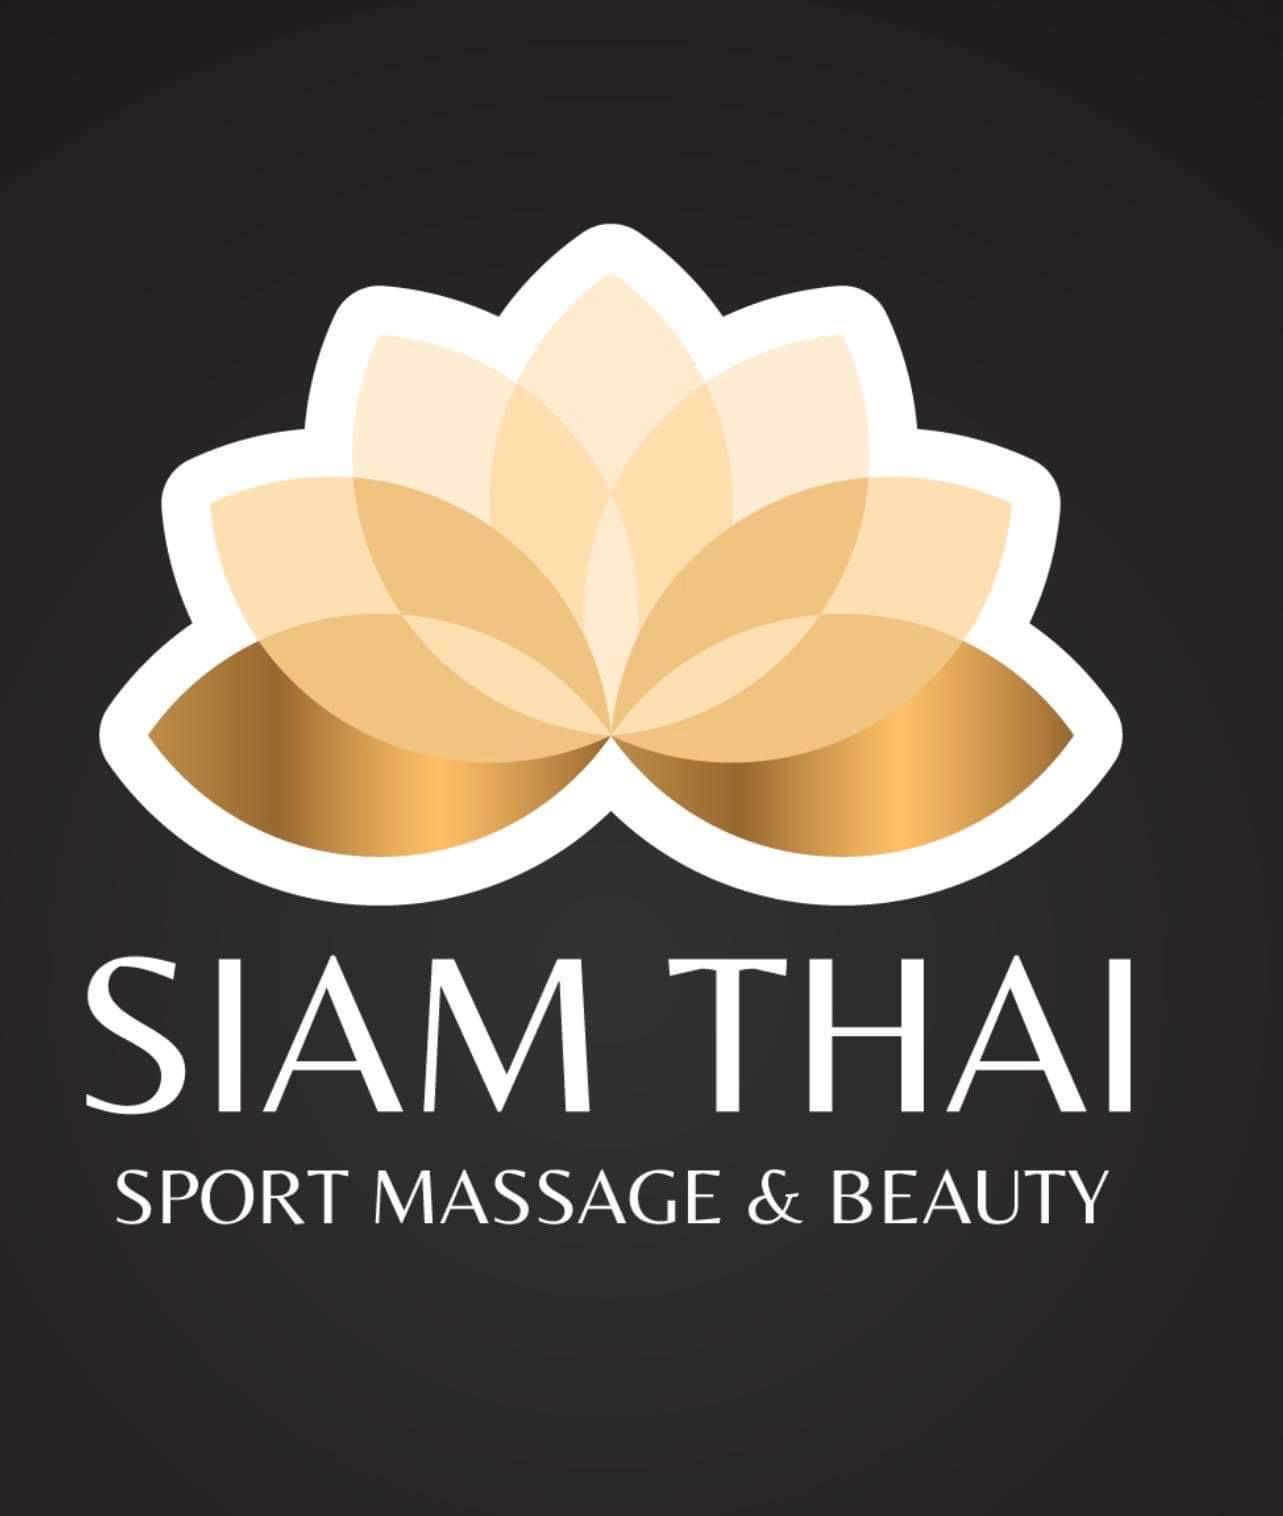 Siam Thai sport massage and Beauty